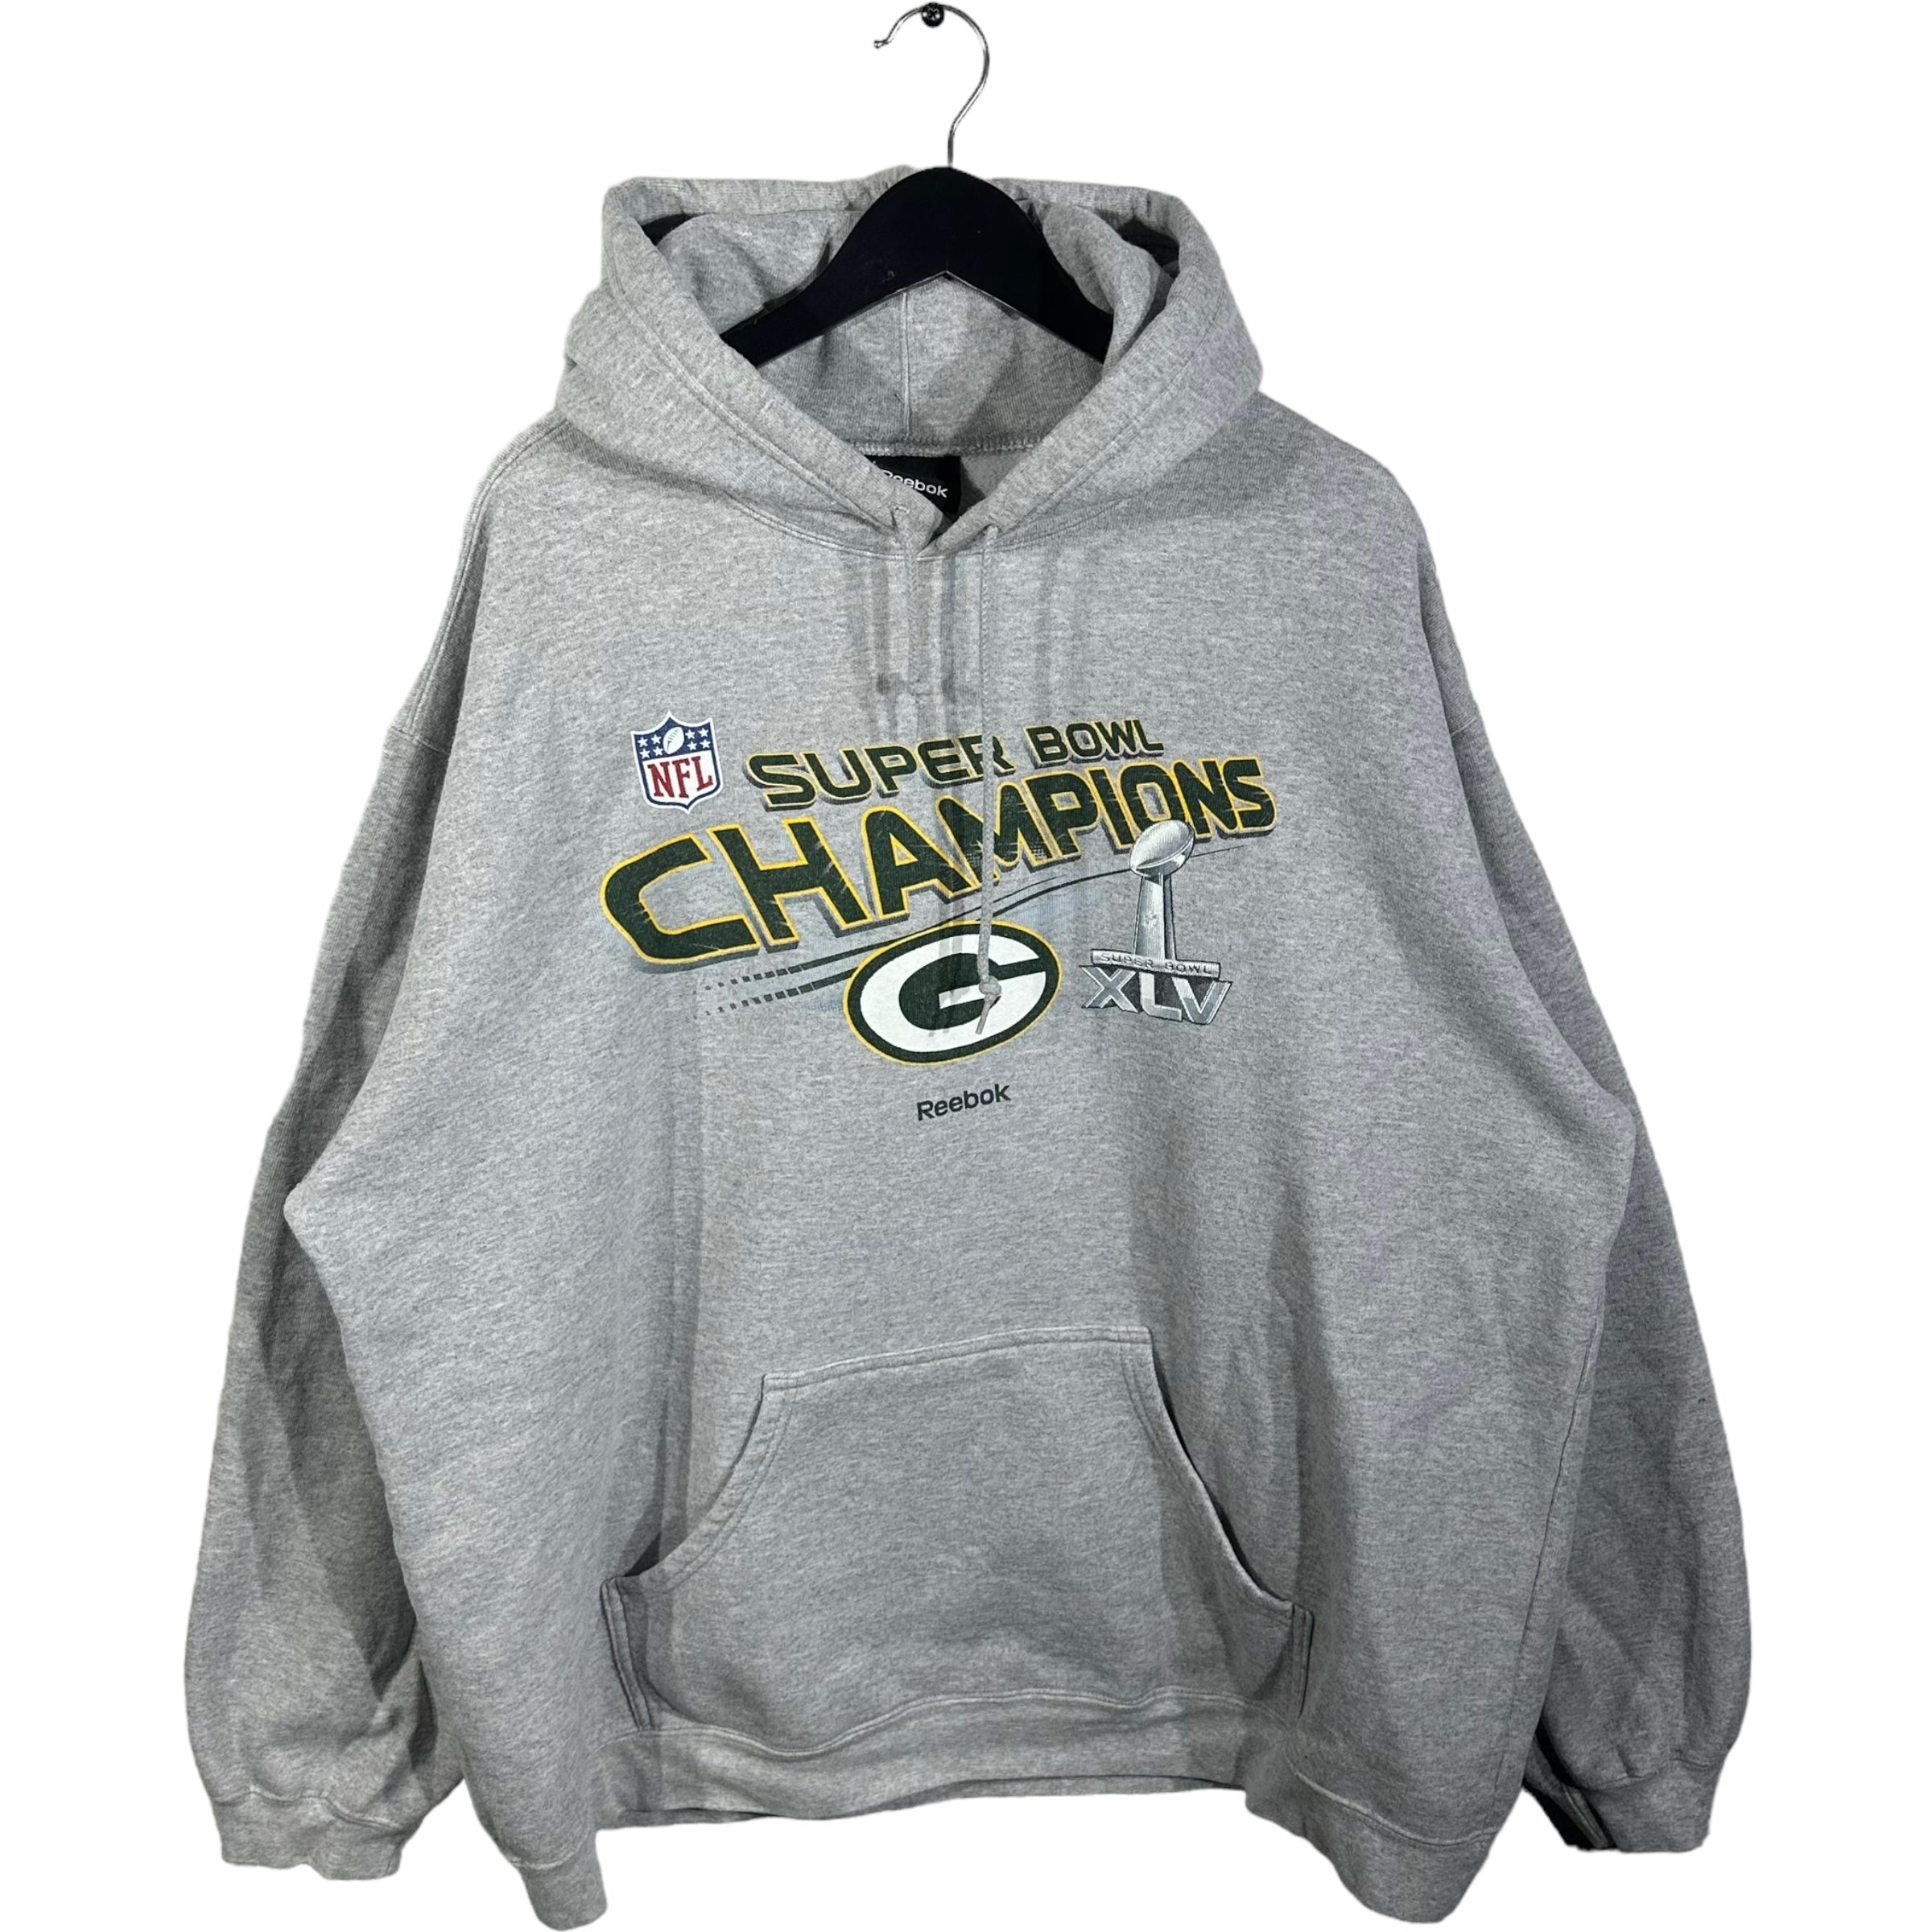 Vintage Green Bay Packers Super Bowl Champions Hoodie